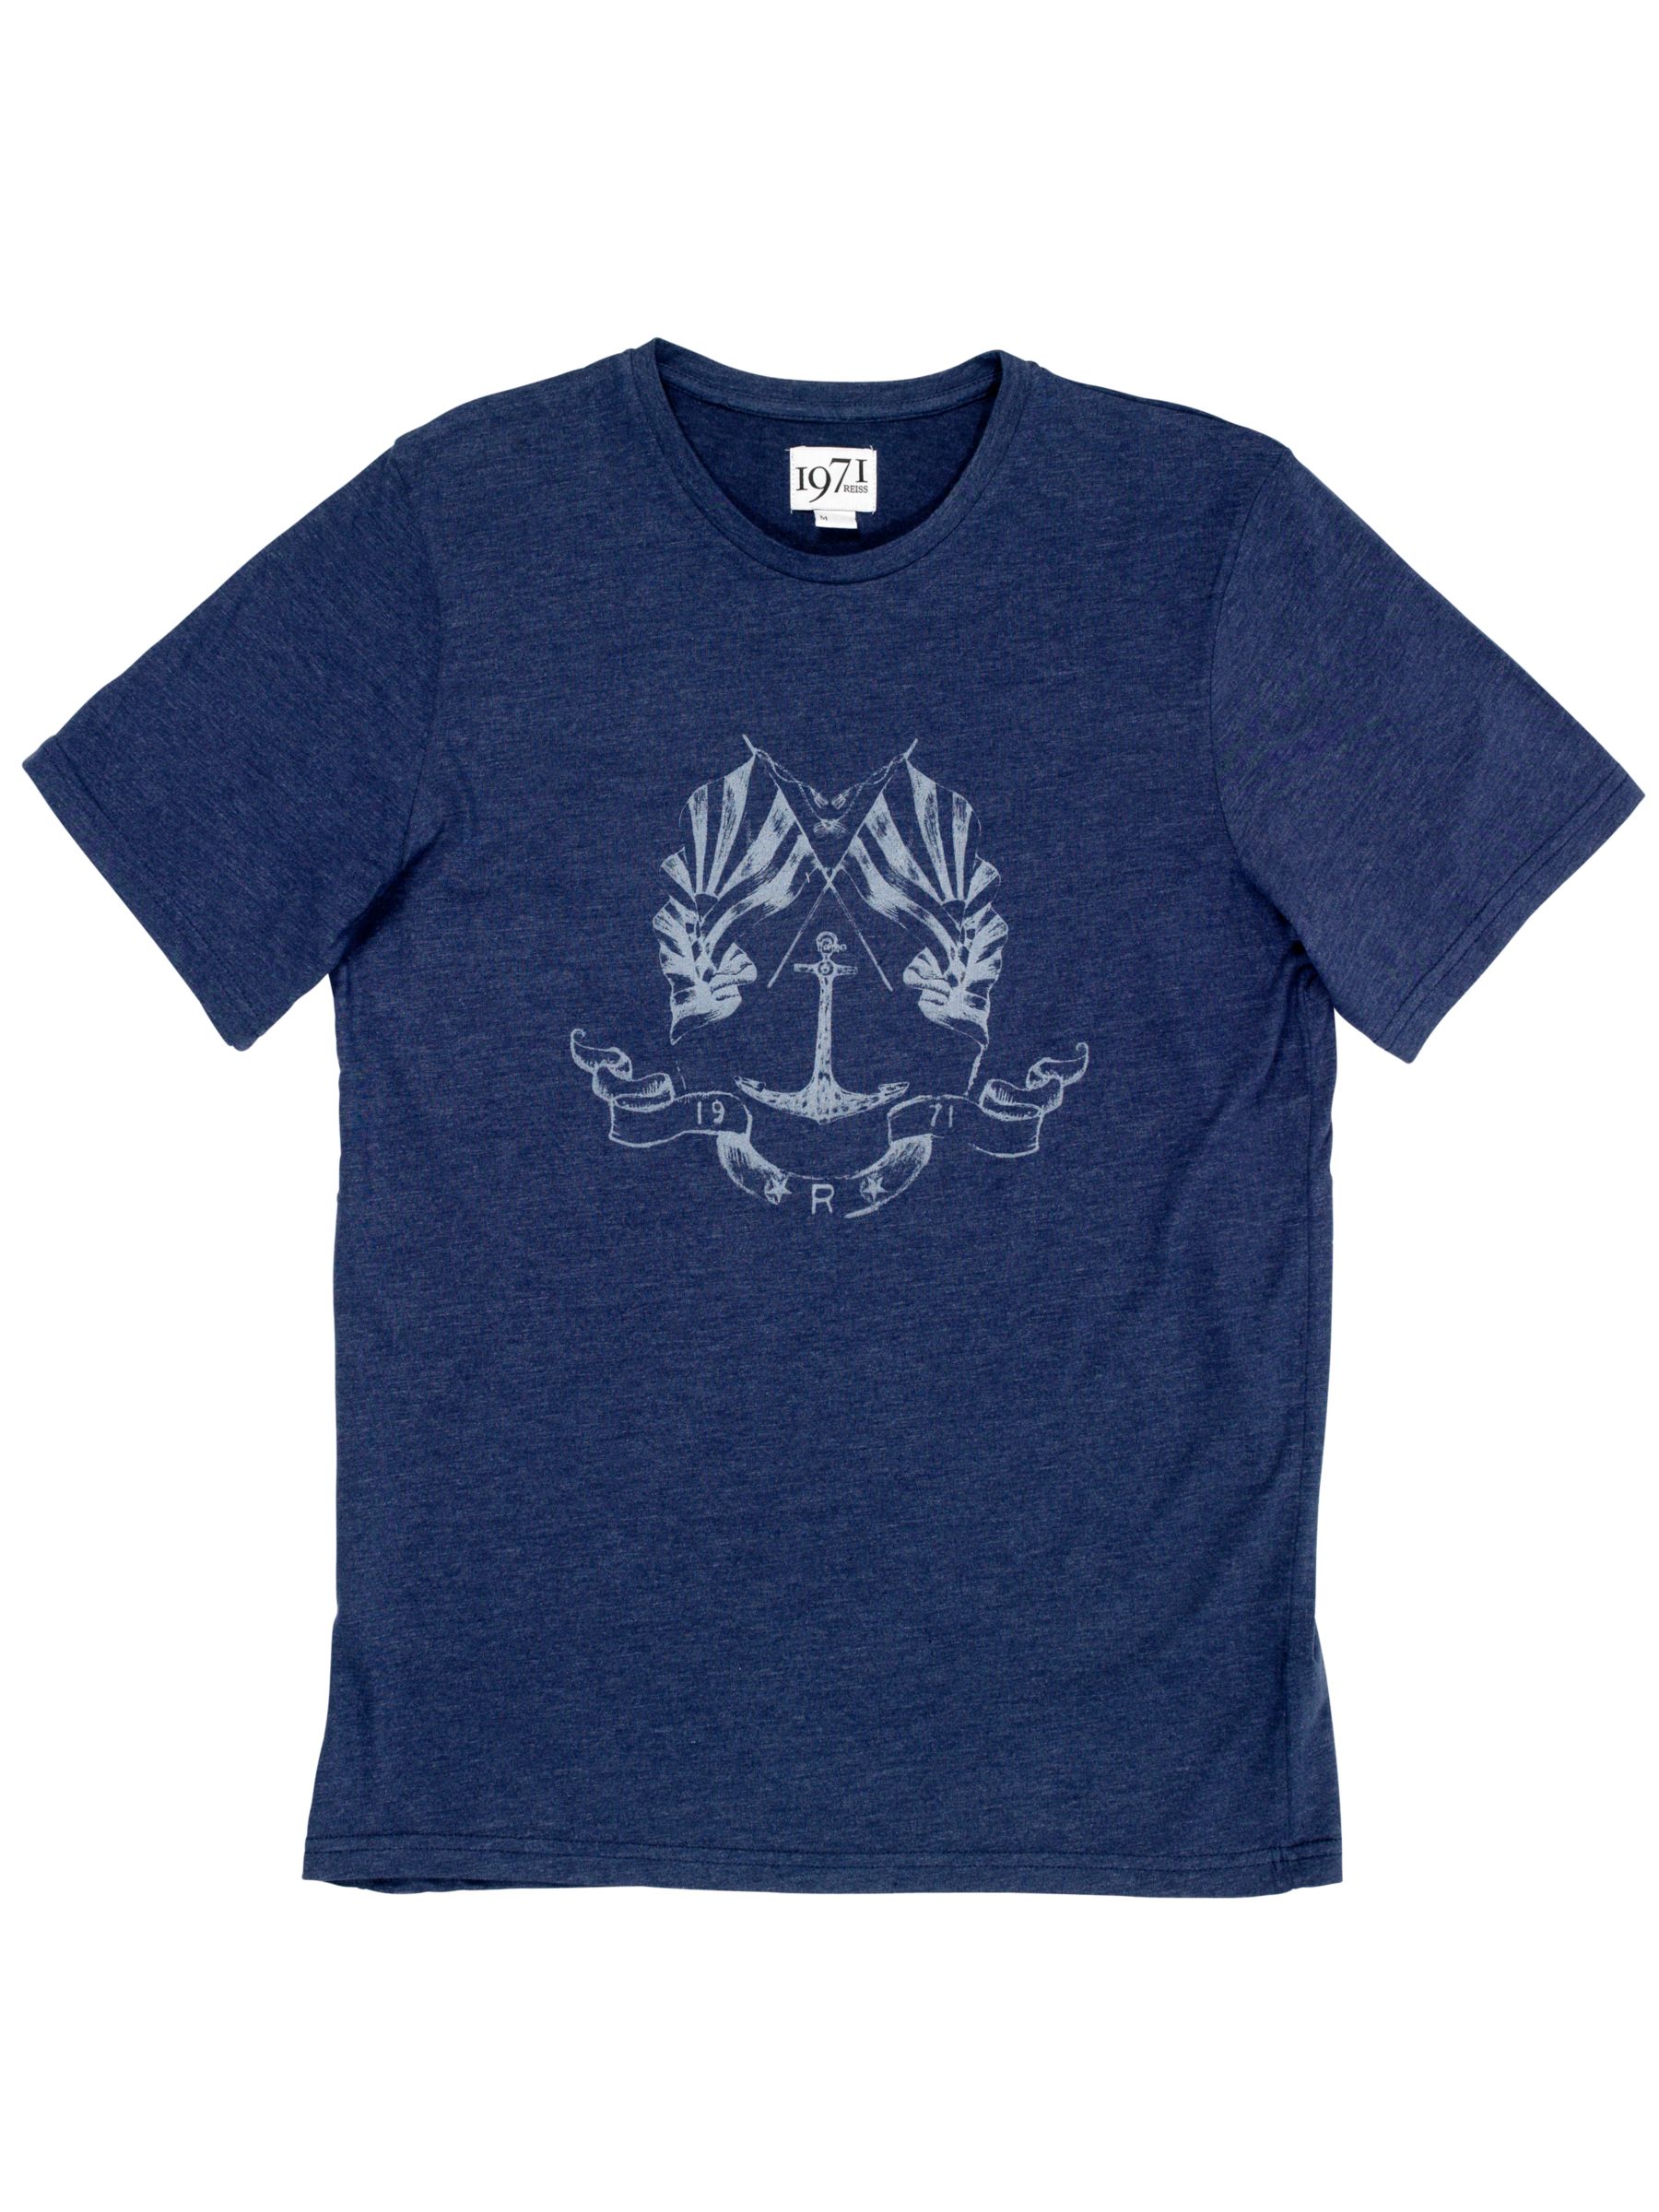 Reiss Insignia Print T-Shirt, Blue